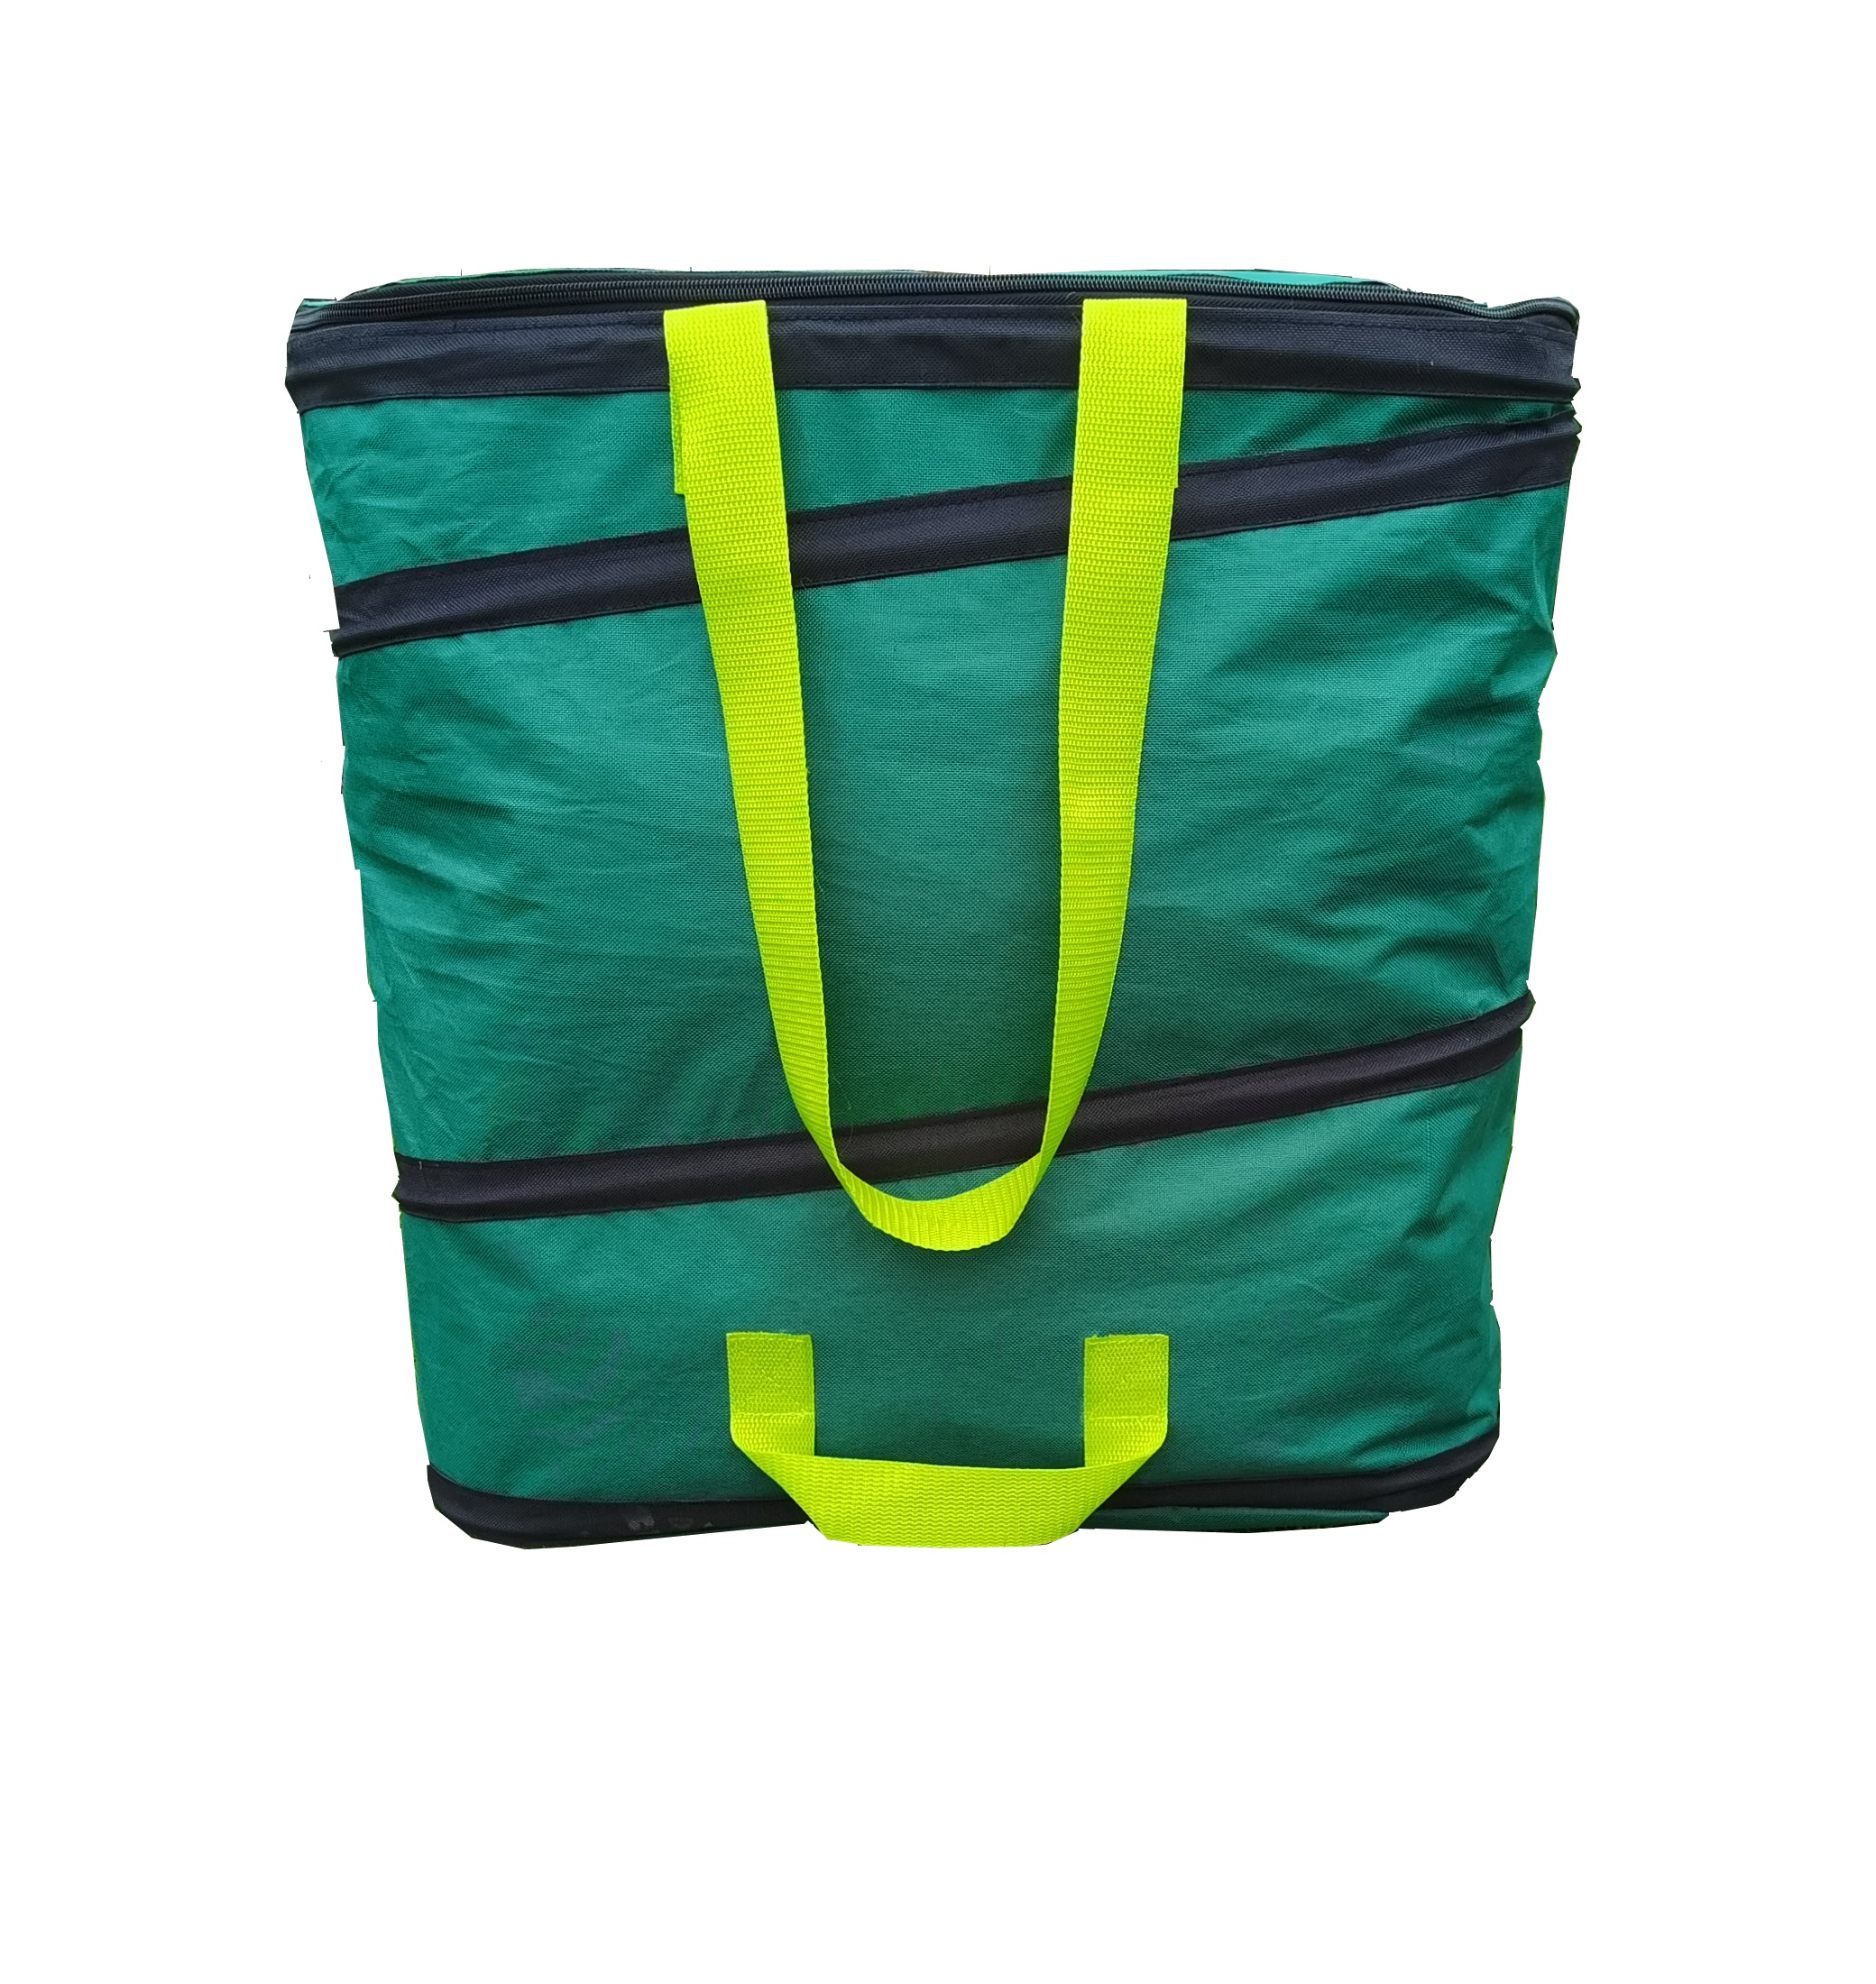 Square pop-up leaf bag POP UP SQUARE green 175 l (50x50x70cm)